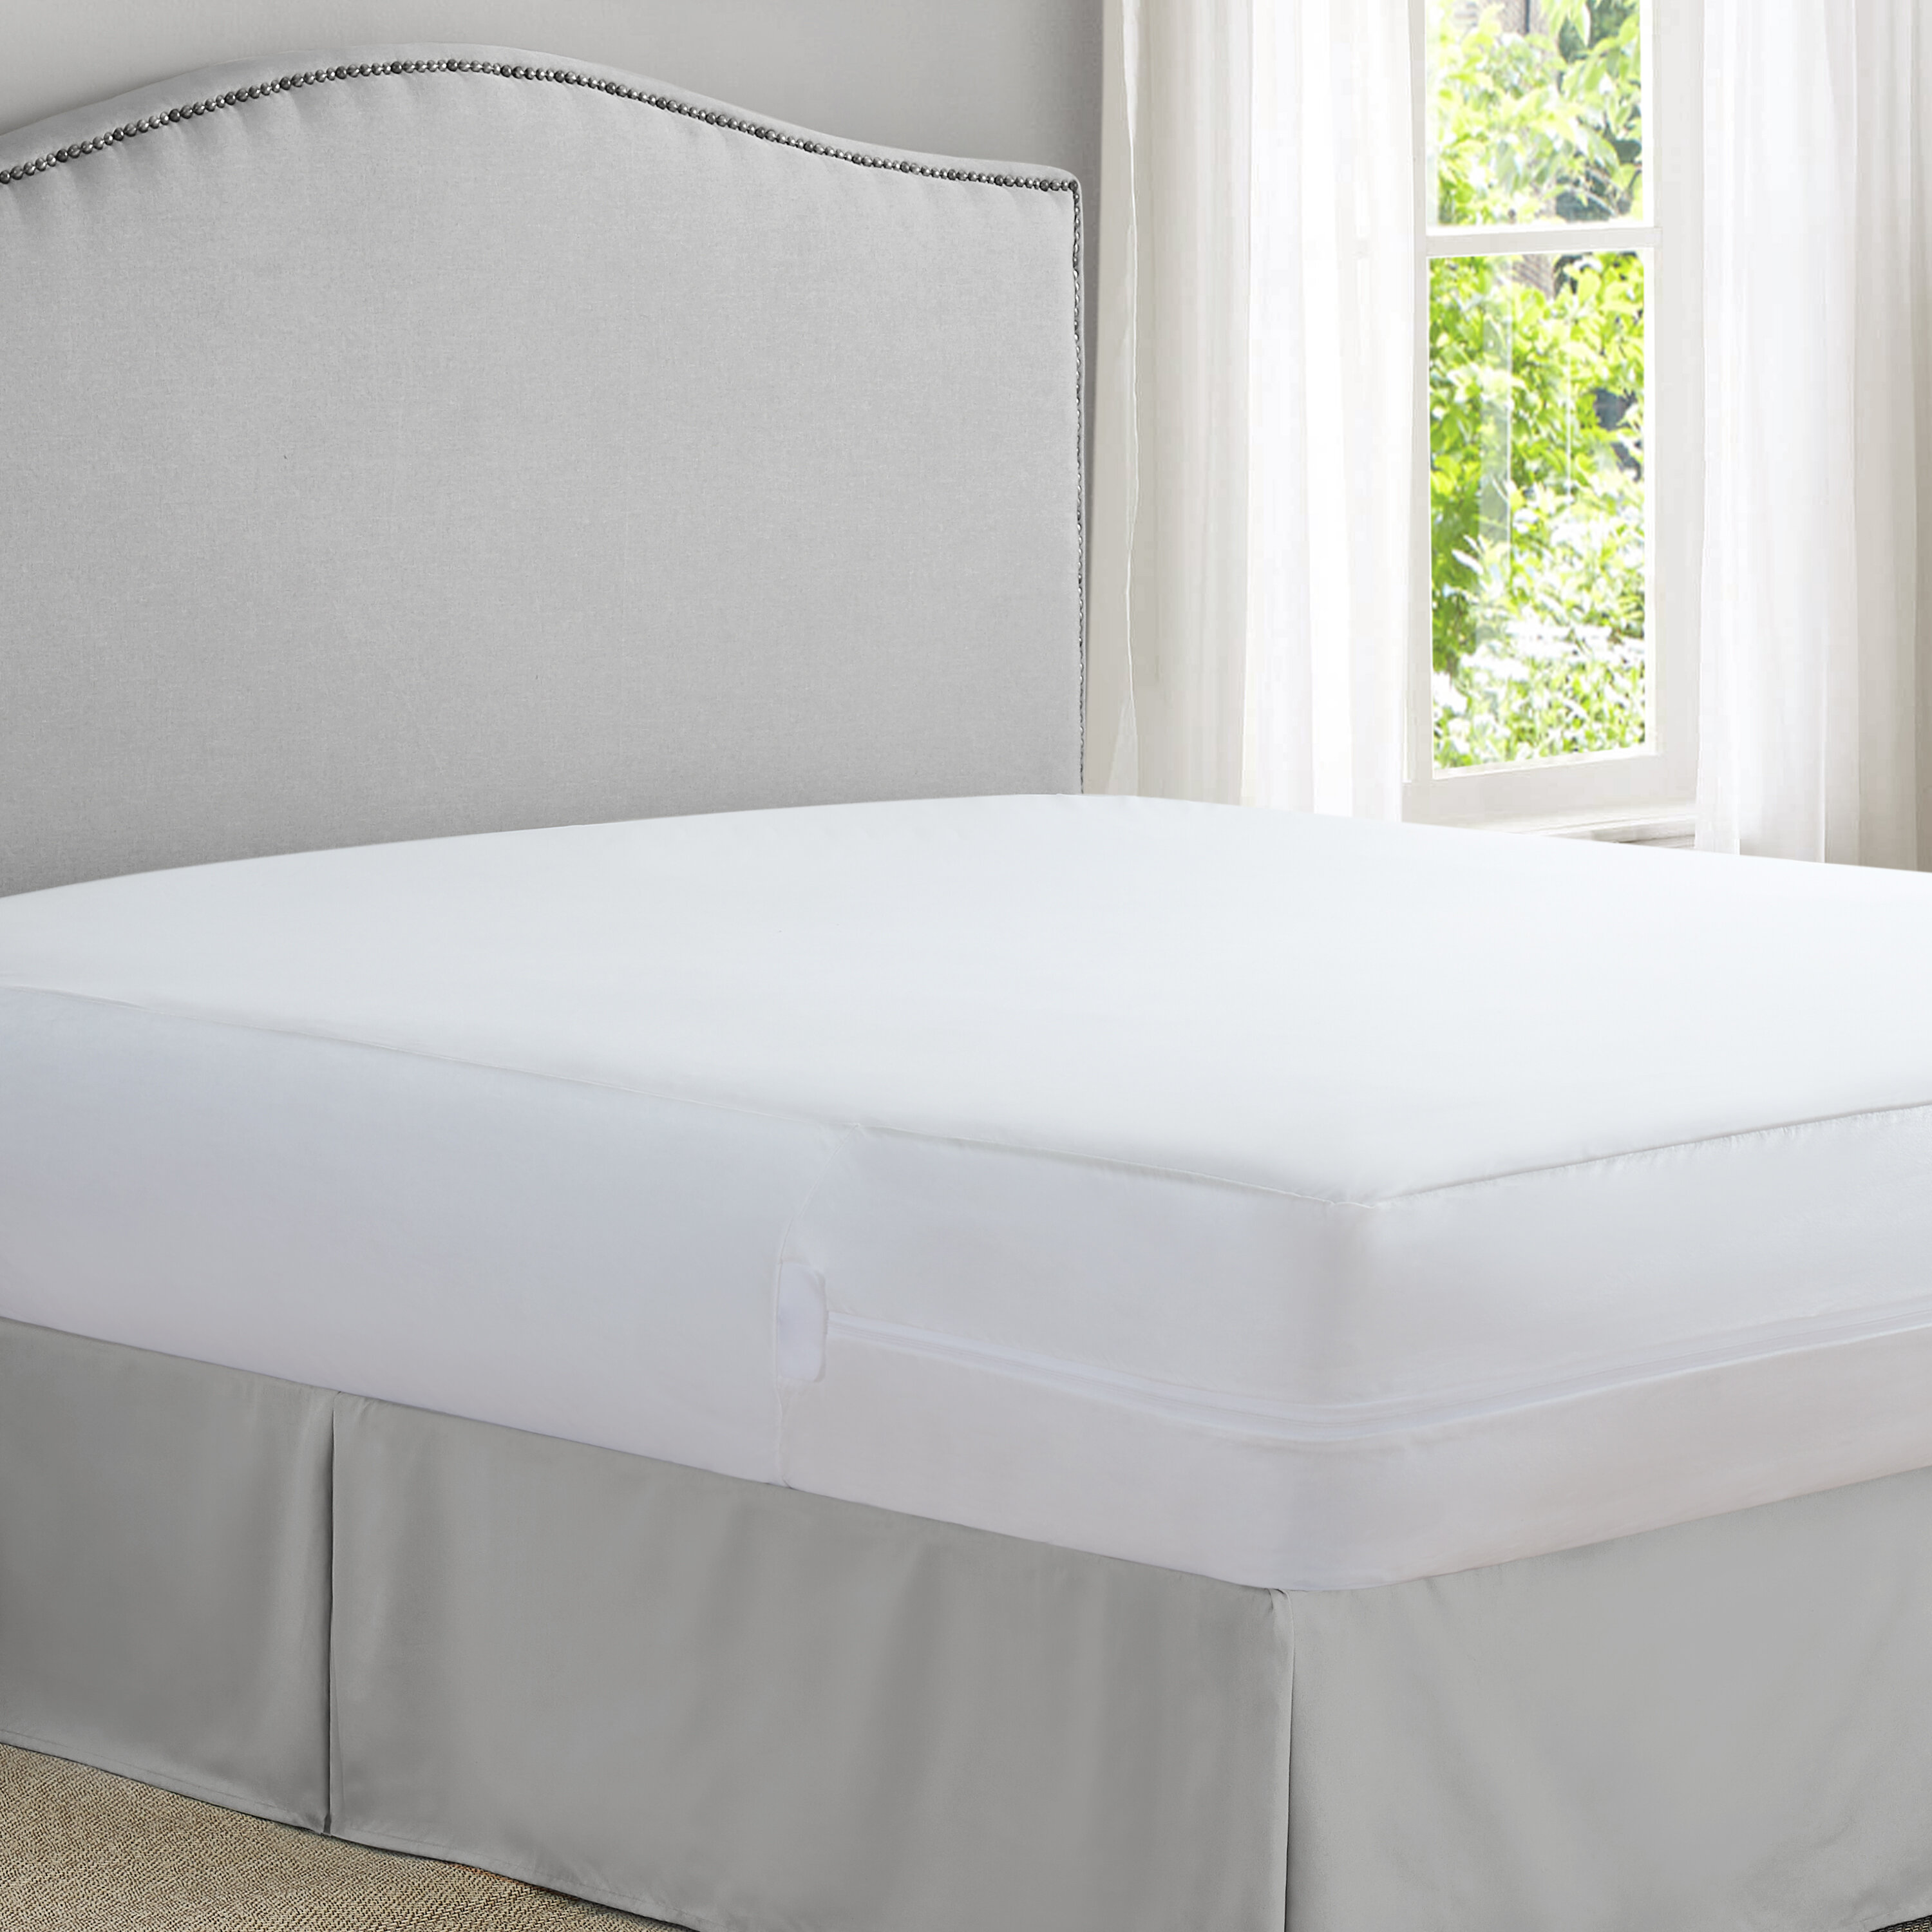 1 Queen Size Zippered Mattress Cover Waterproof Bed Bug Dust Mite